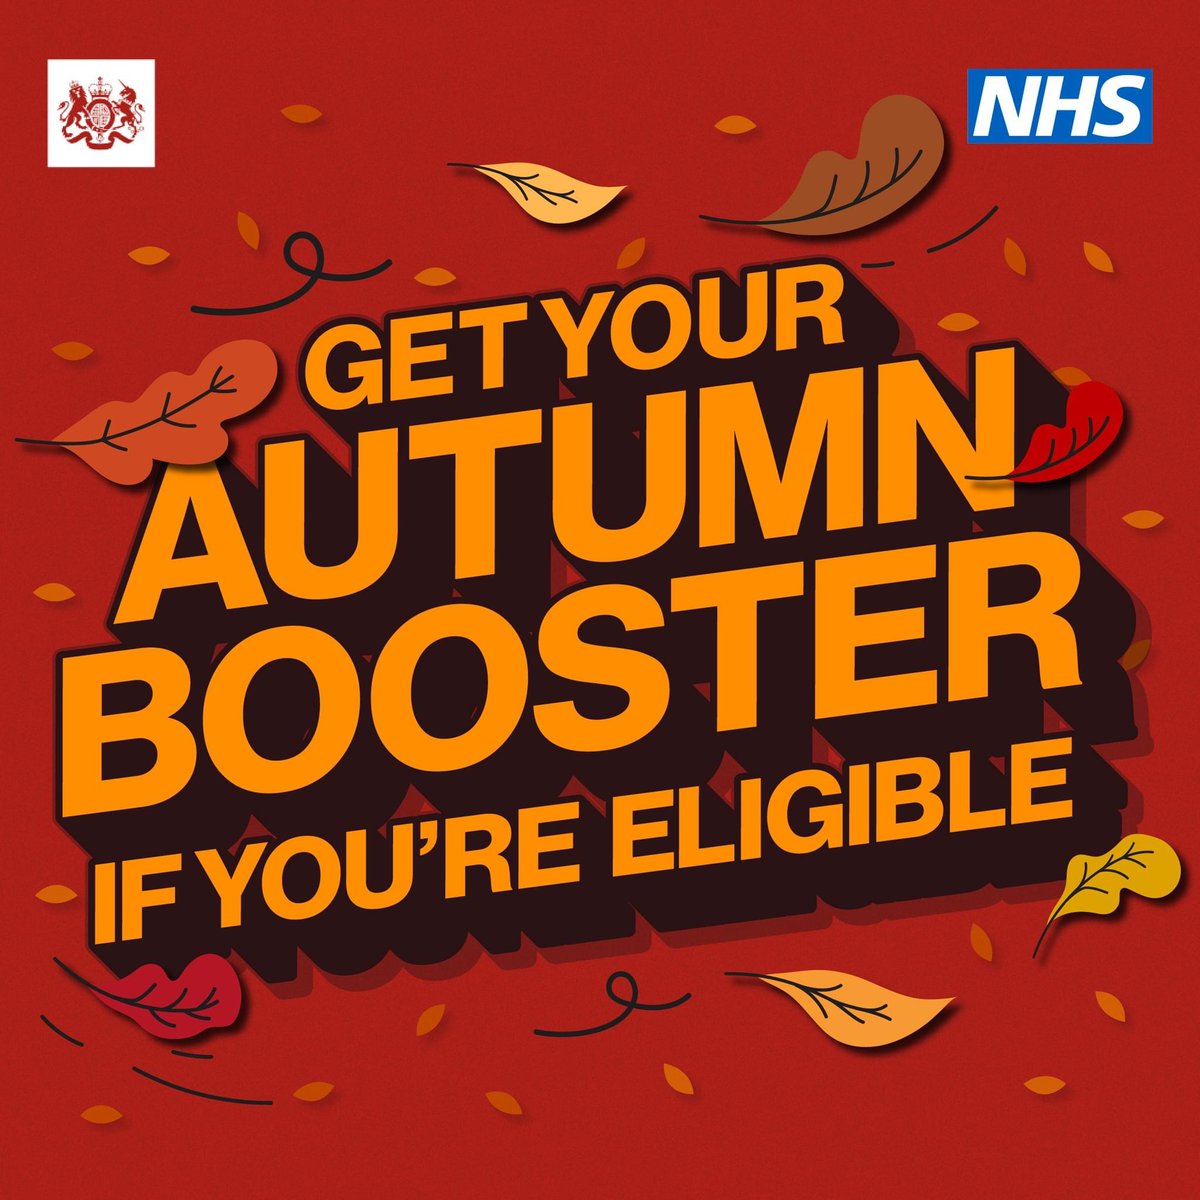 #autumnbooster #seasonalbooster #NHS #TwoCities